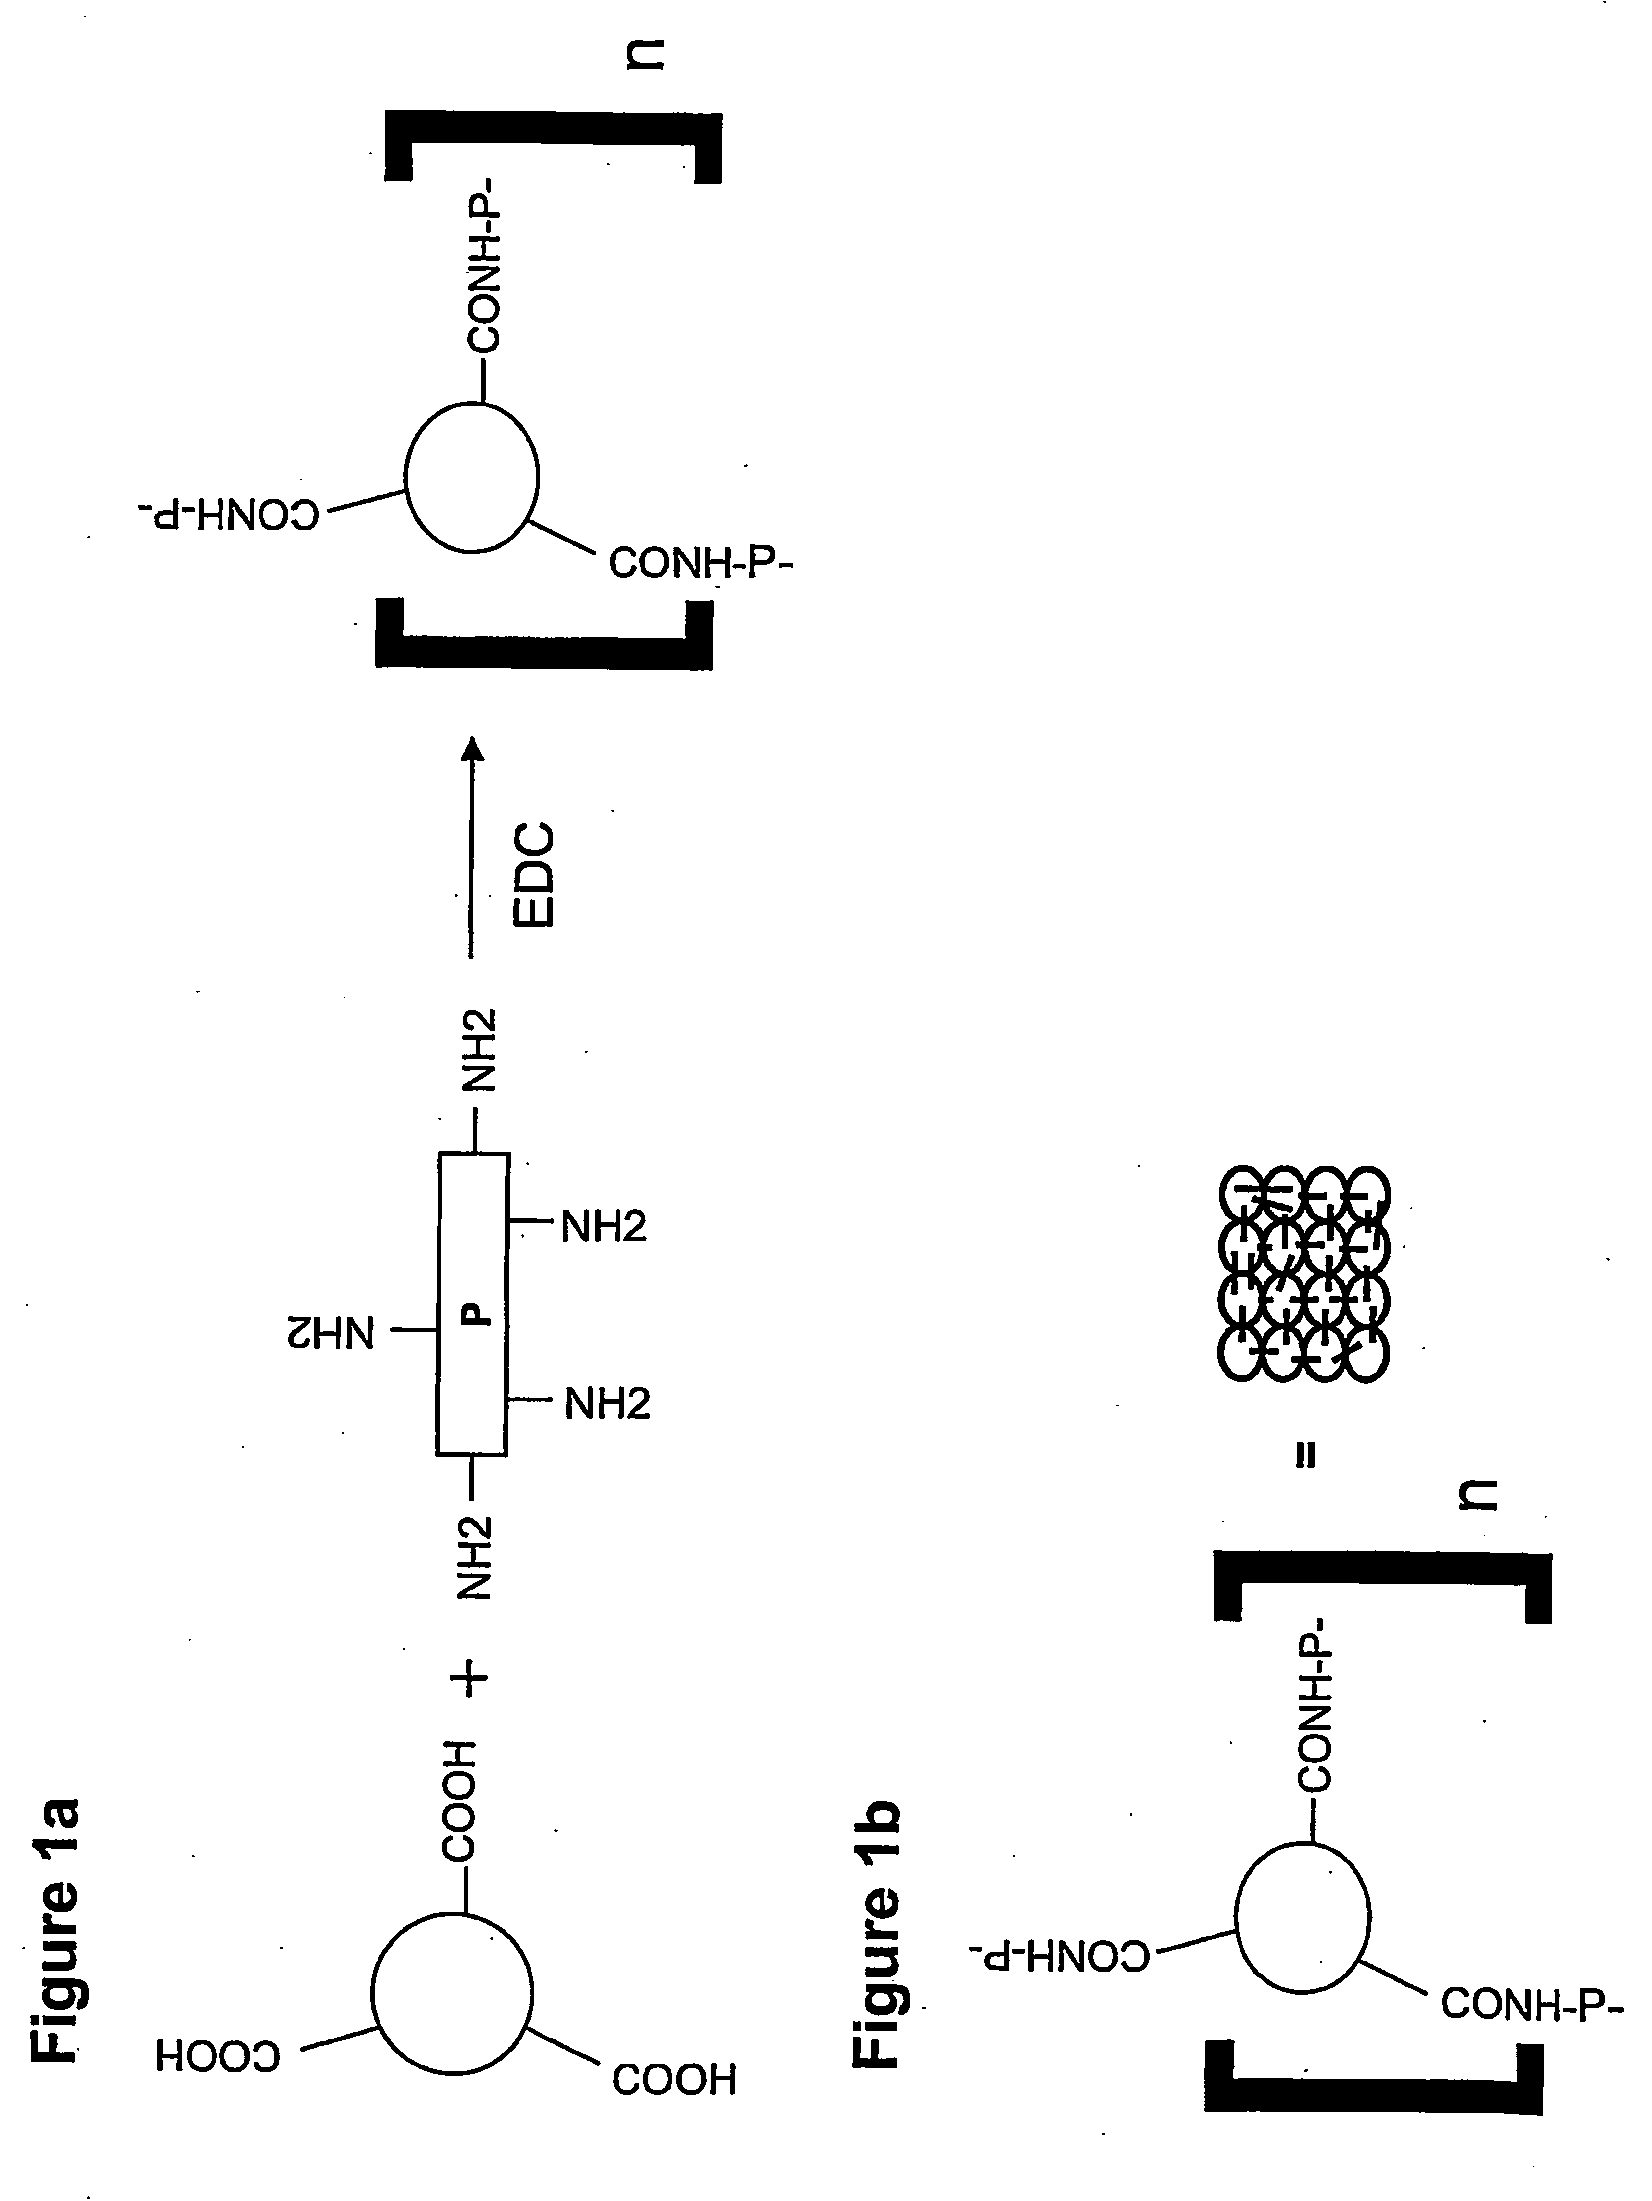 Method of Enhancing a Fluorescent Signal